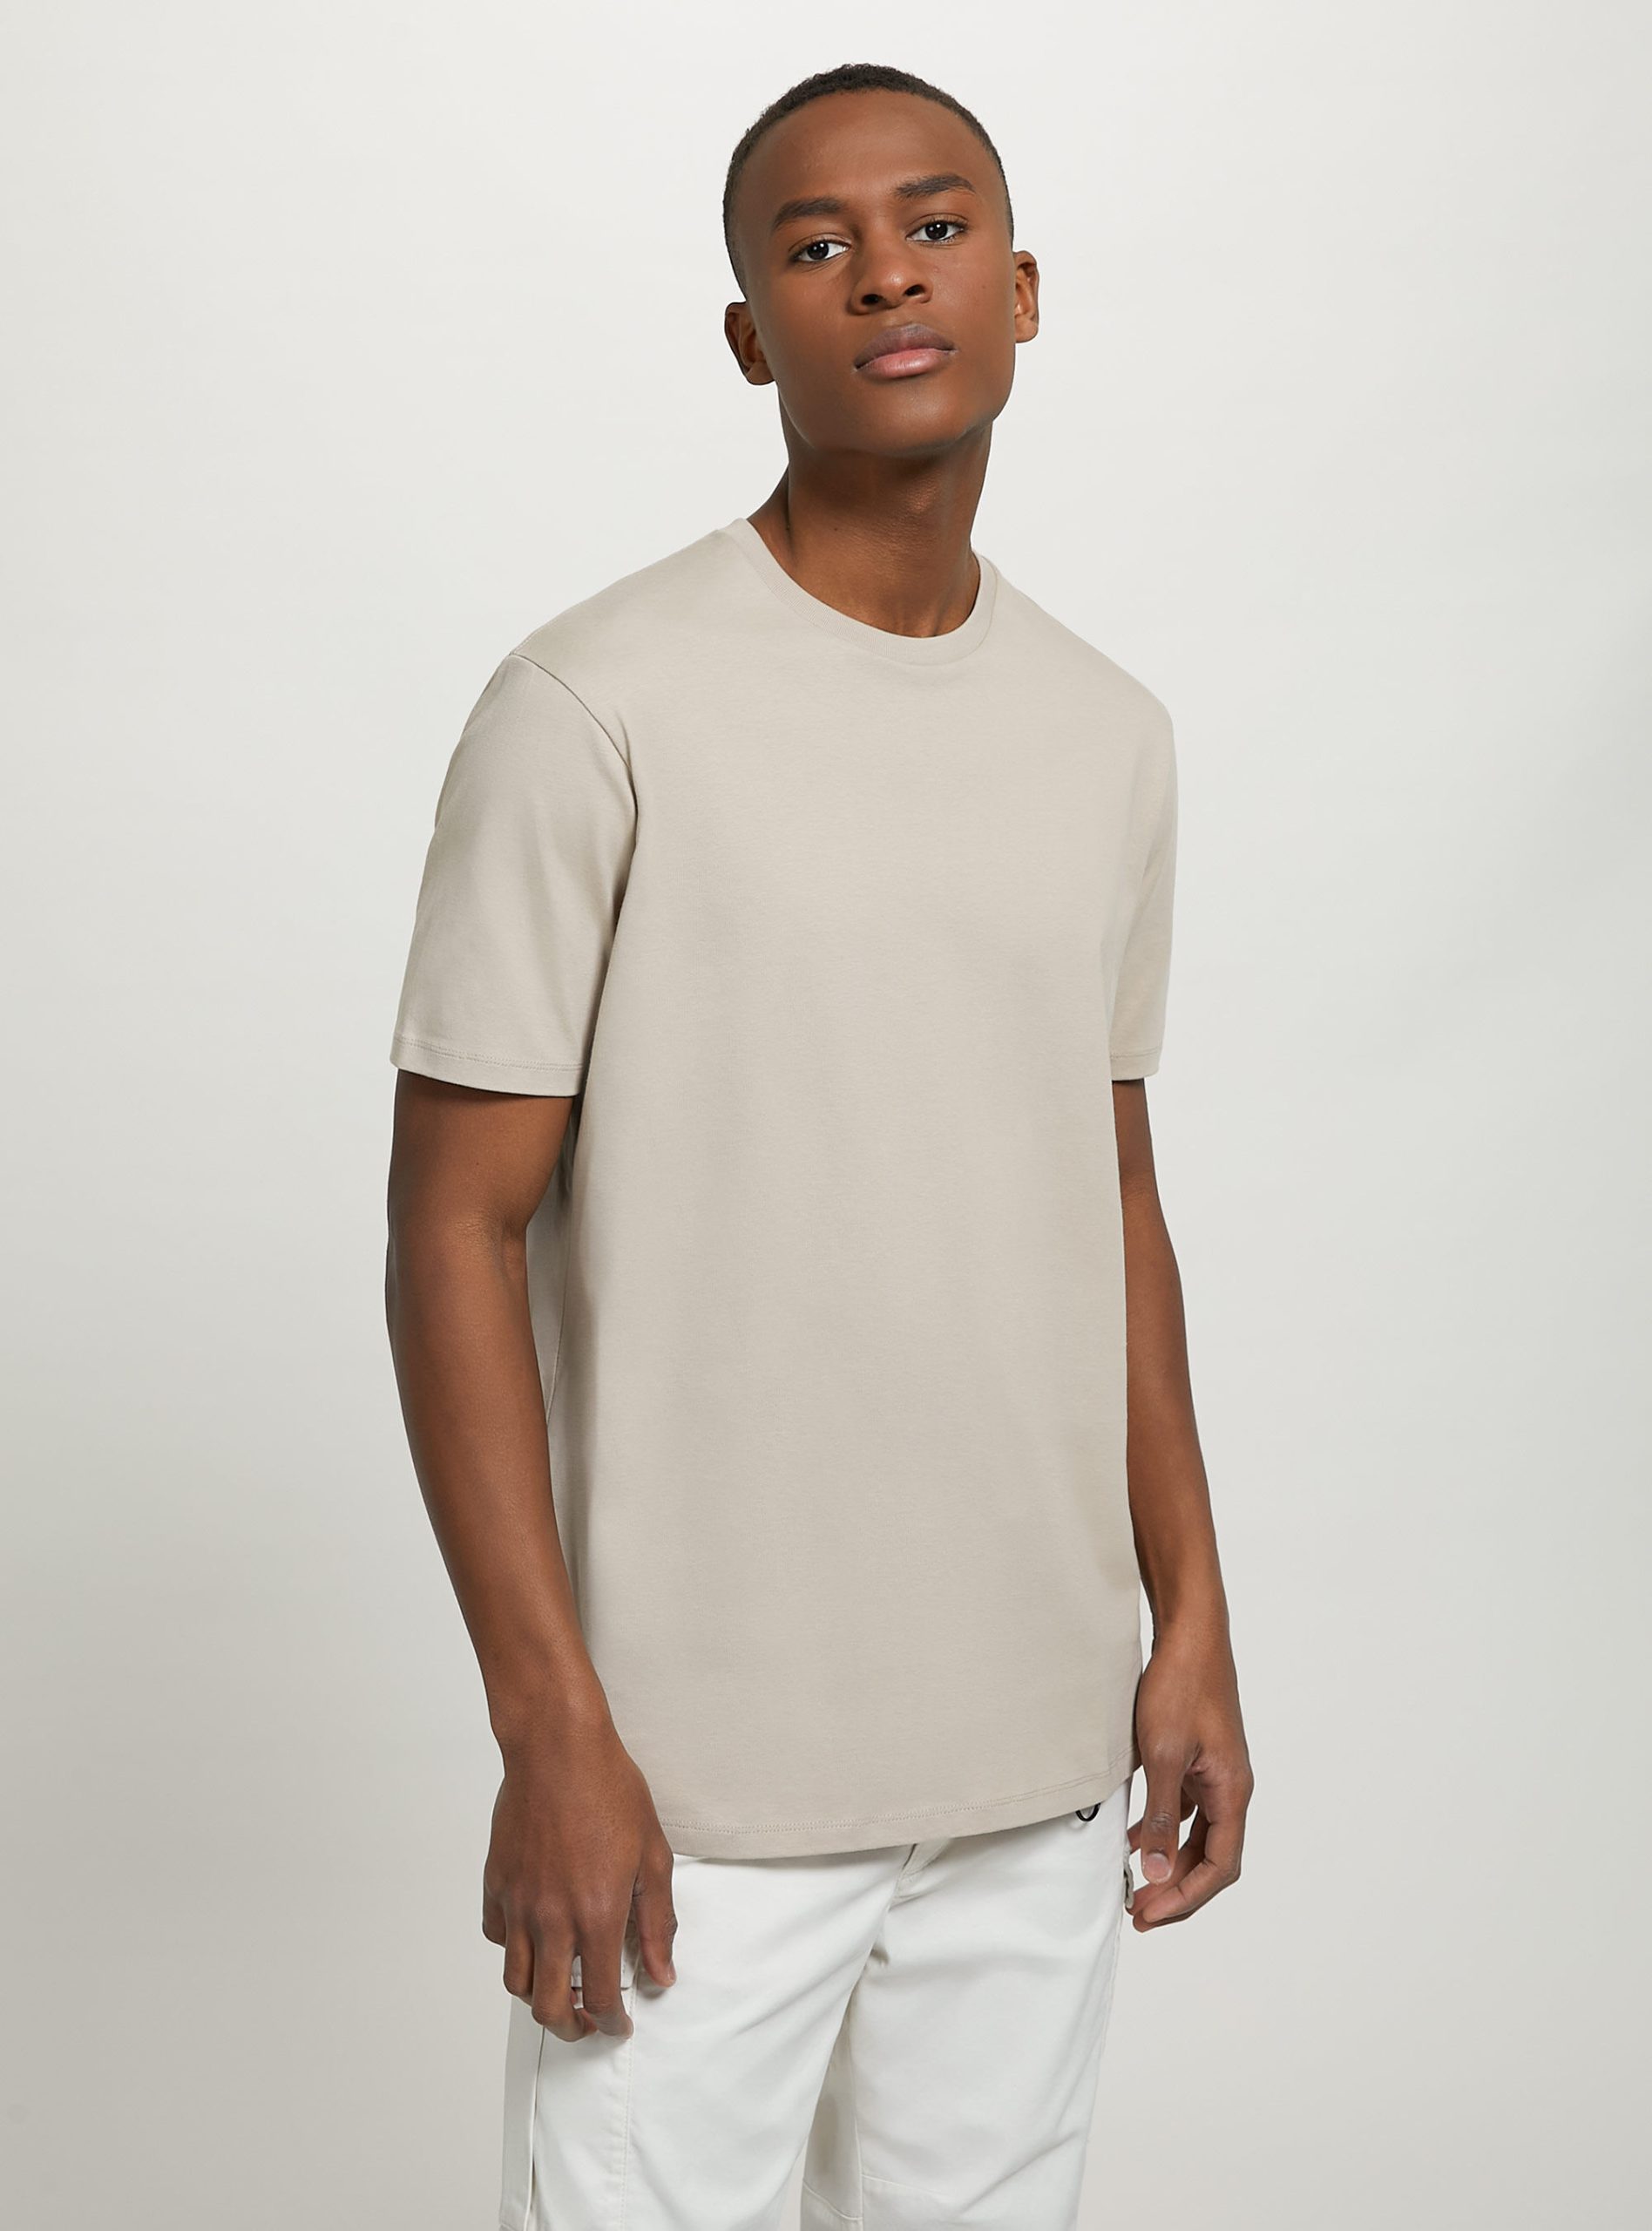 Bg2 Beige Medium Cotton Crew-Neck T-Shirt Männer Merkmal Alcott T-Shirts – 1